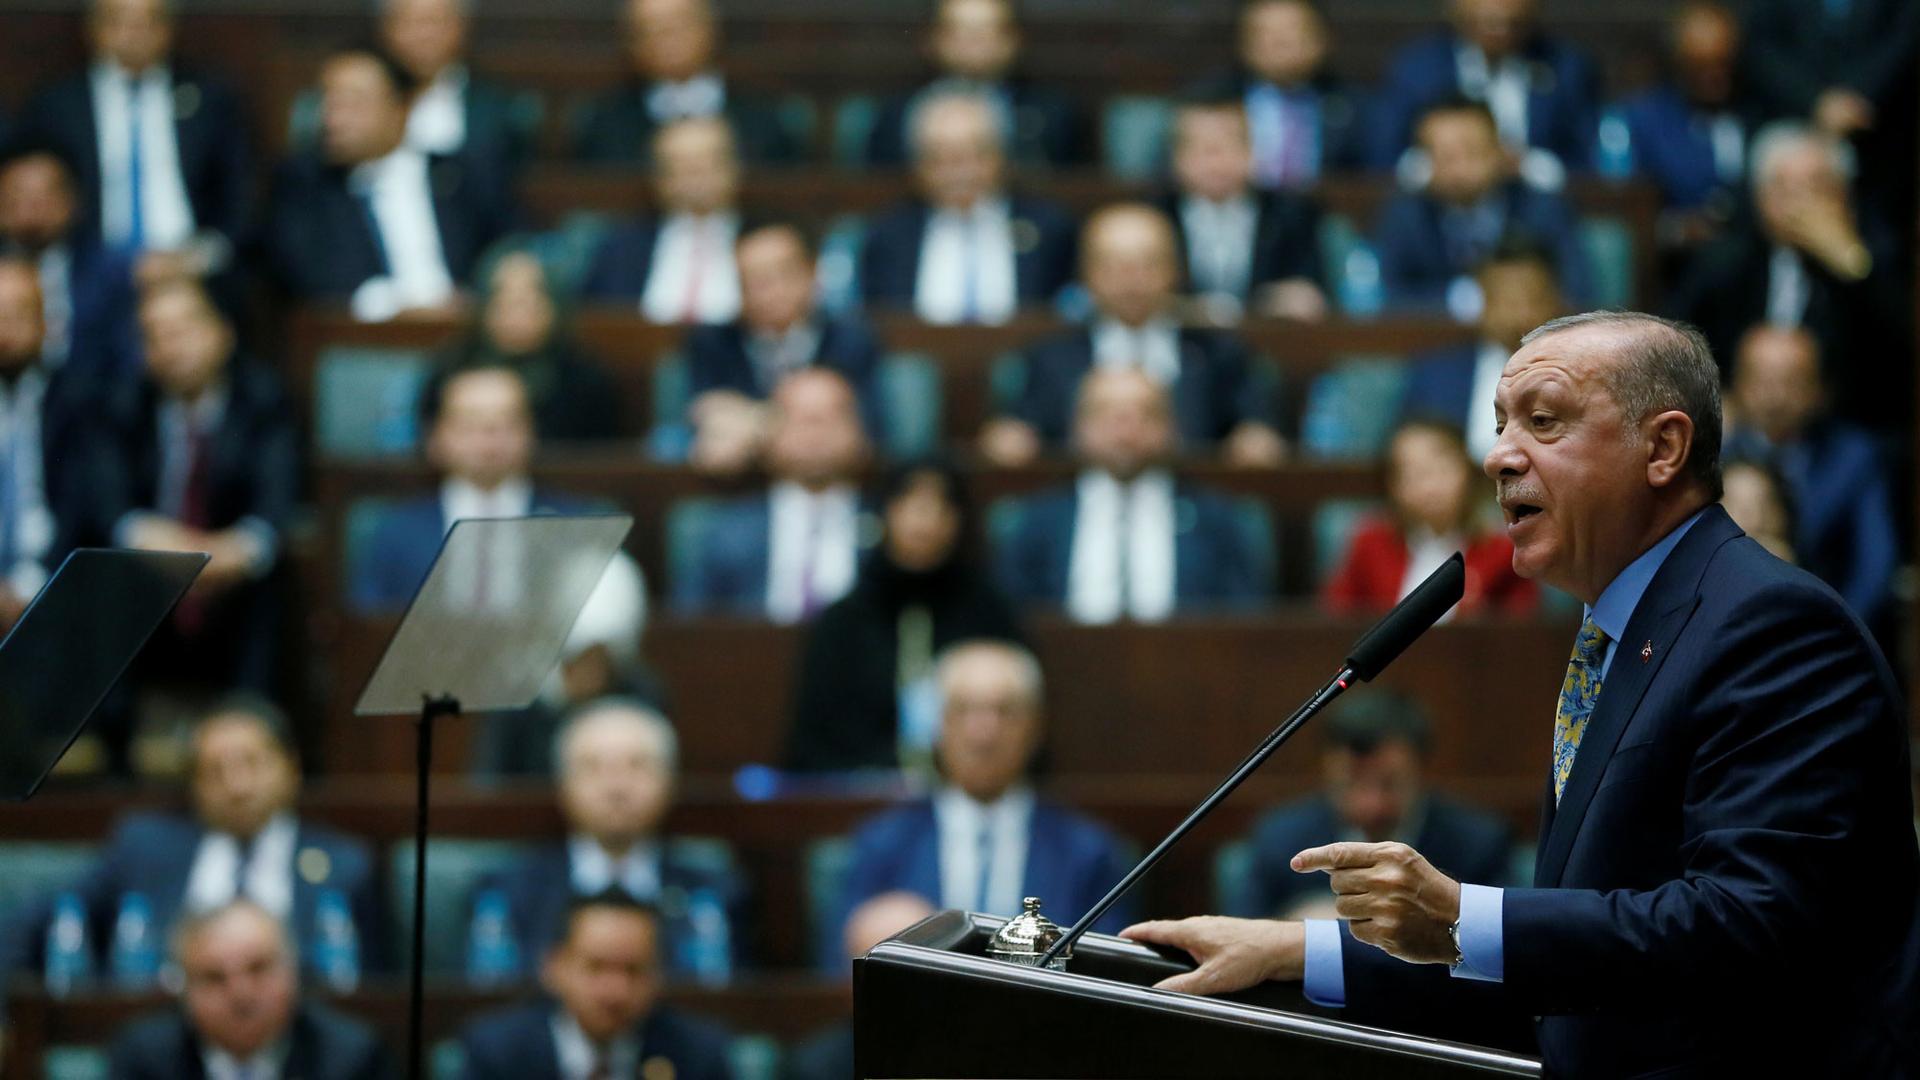 Turkish President Tayyip Erdoğan is shown at a podium addresses members of parliament in Ankara, Turkey.